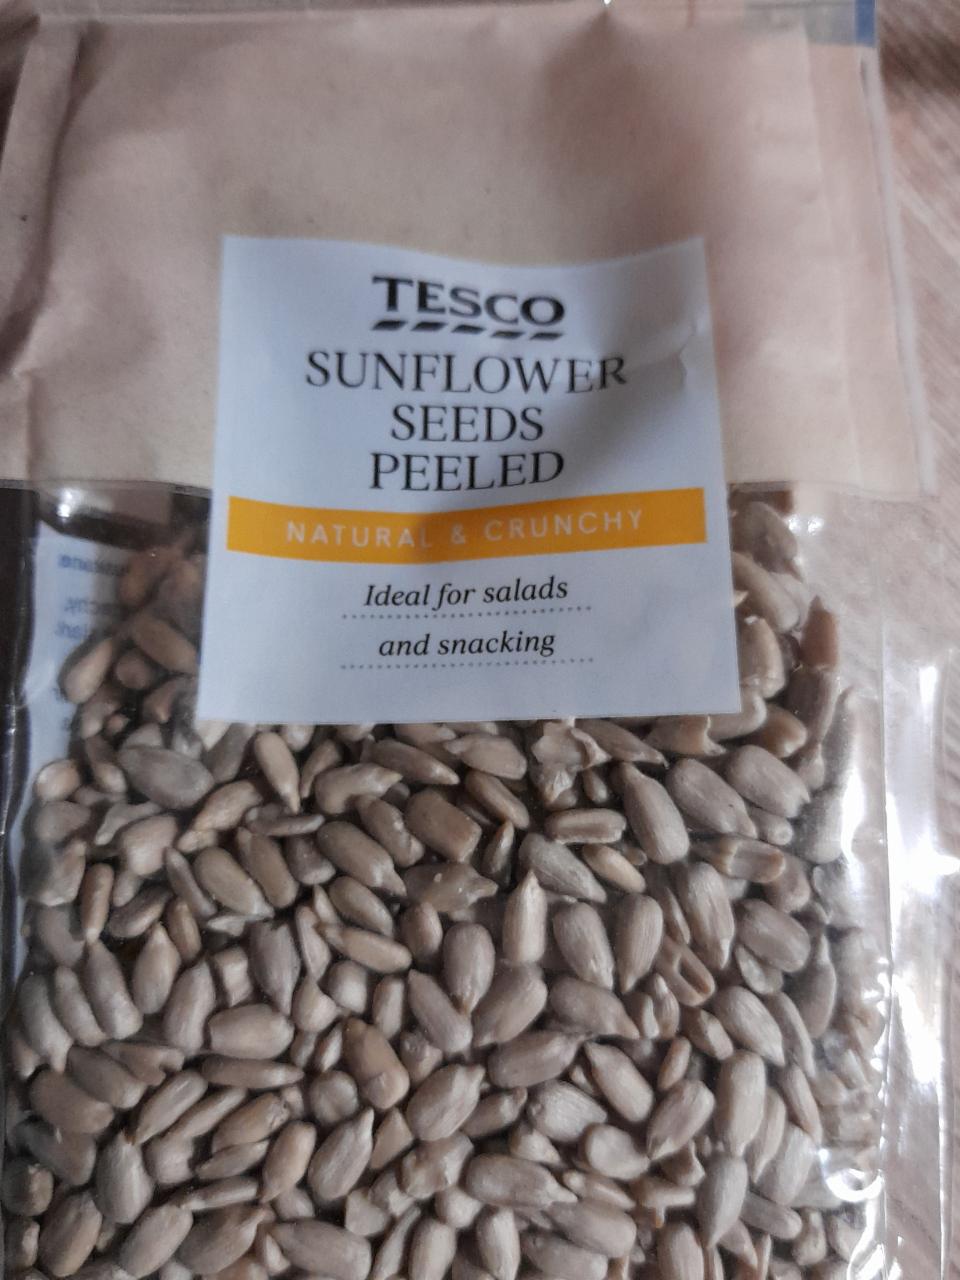 Képek - Sunflower seeds peeled Tesco